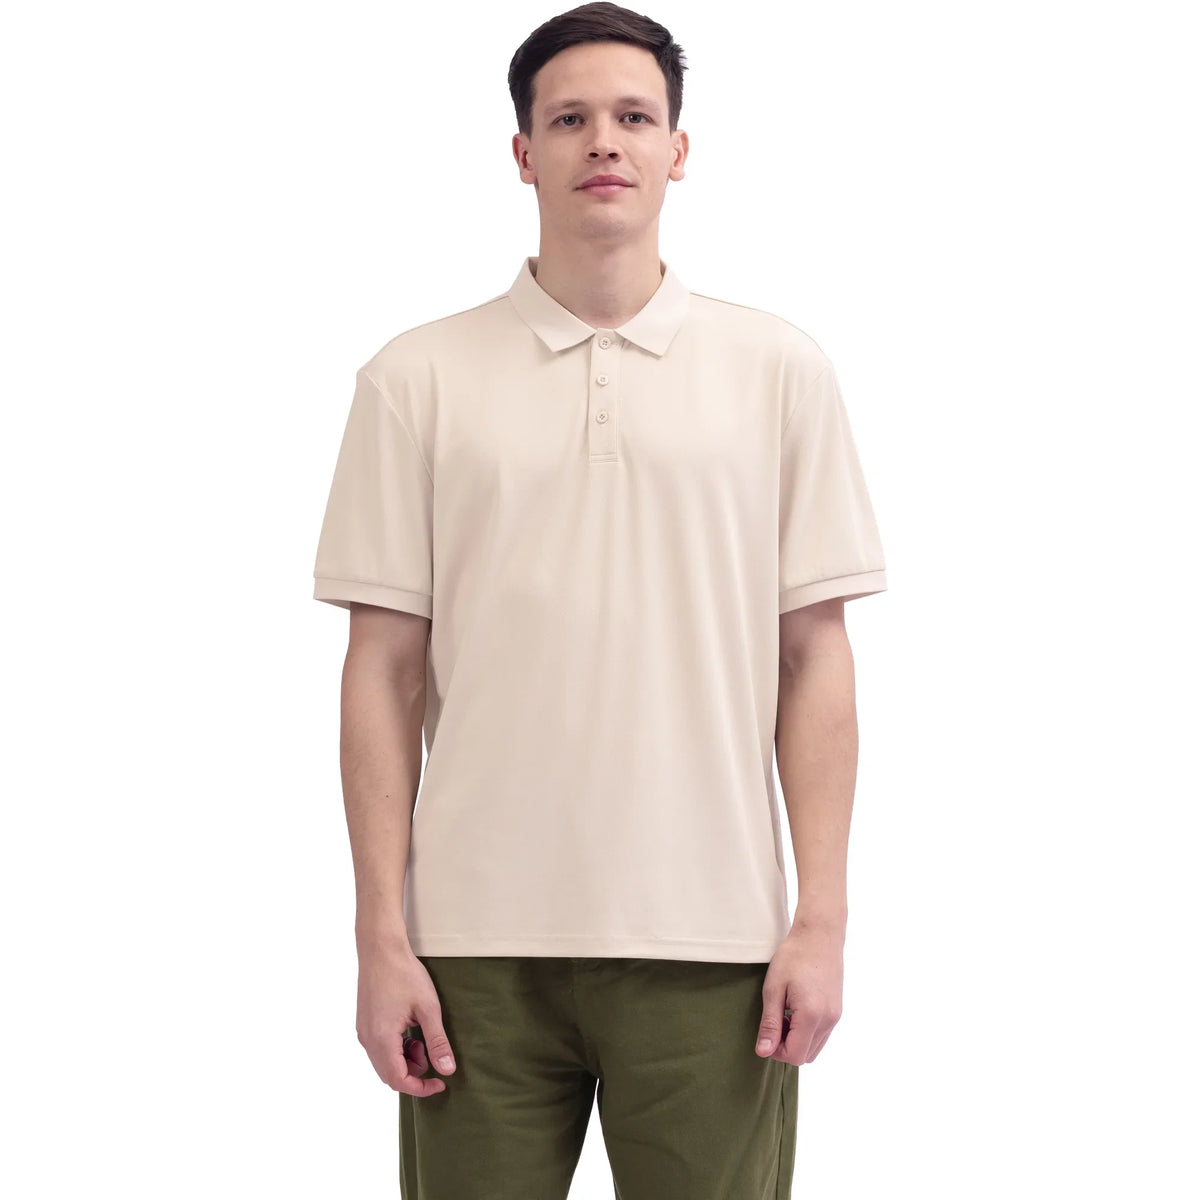 Street Look Polo Shirt For Men